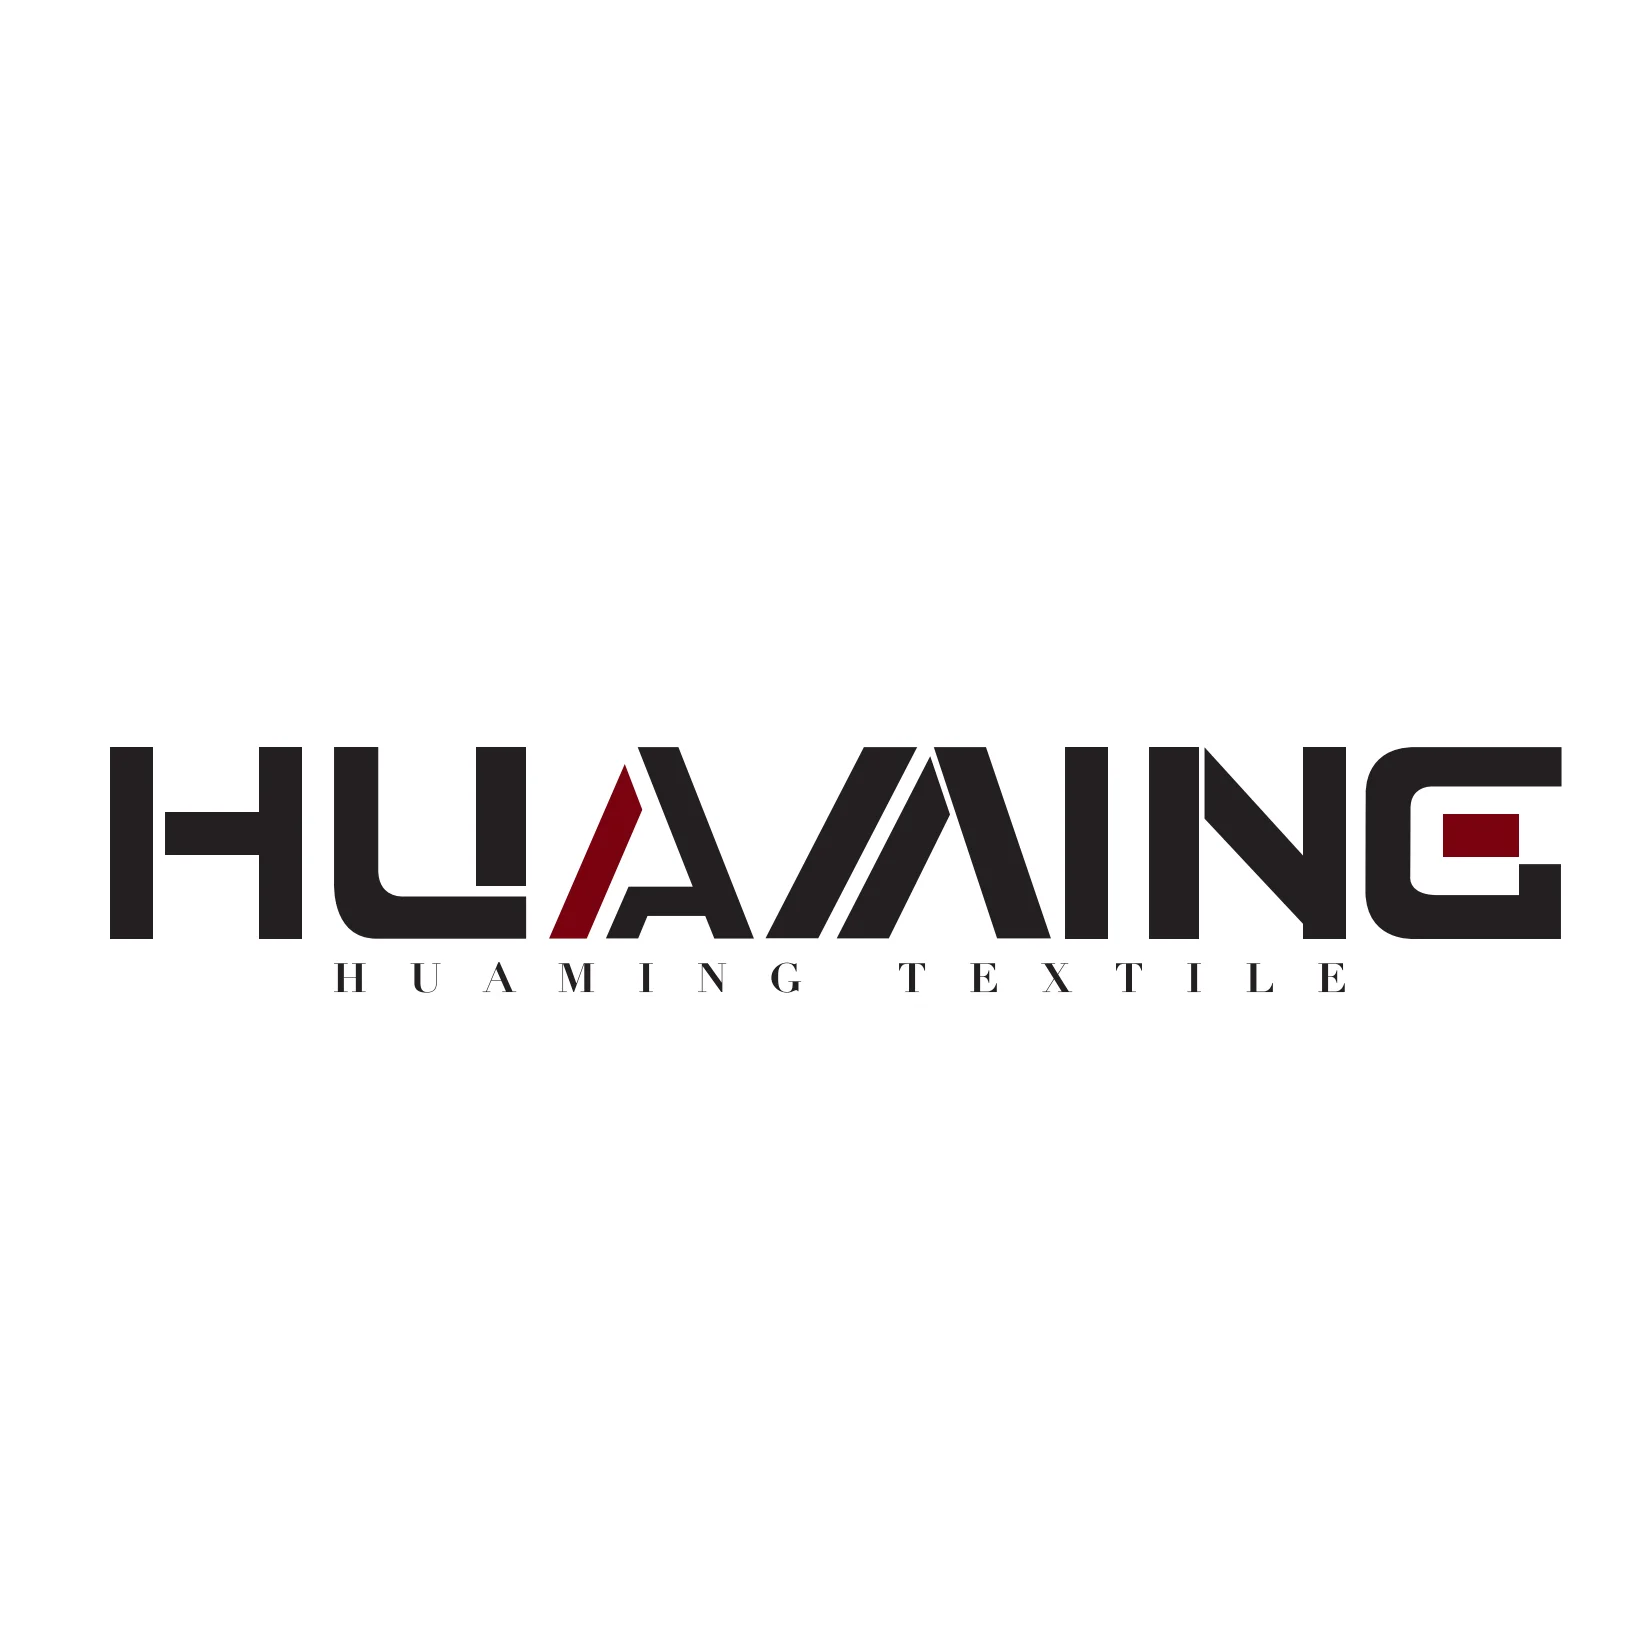 Haining Huaming Textile Co., Ltd.